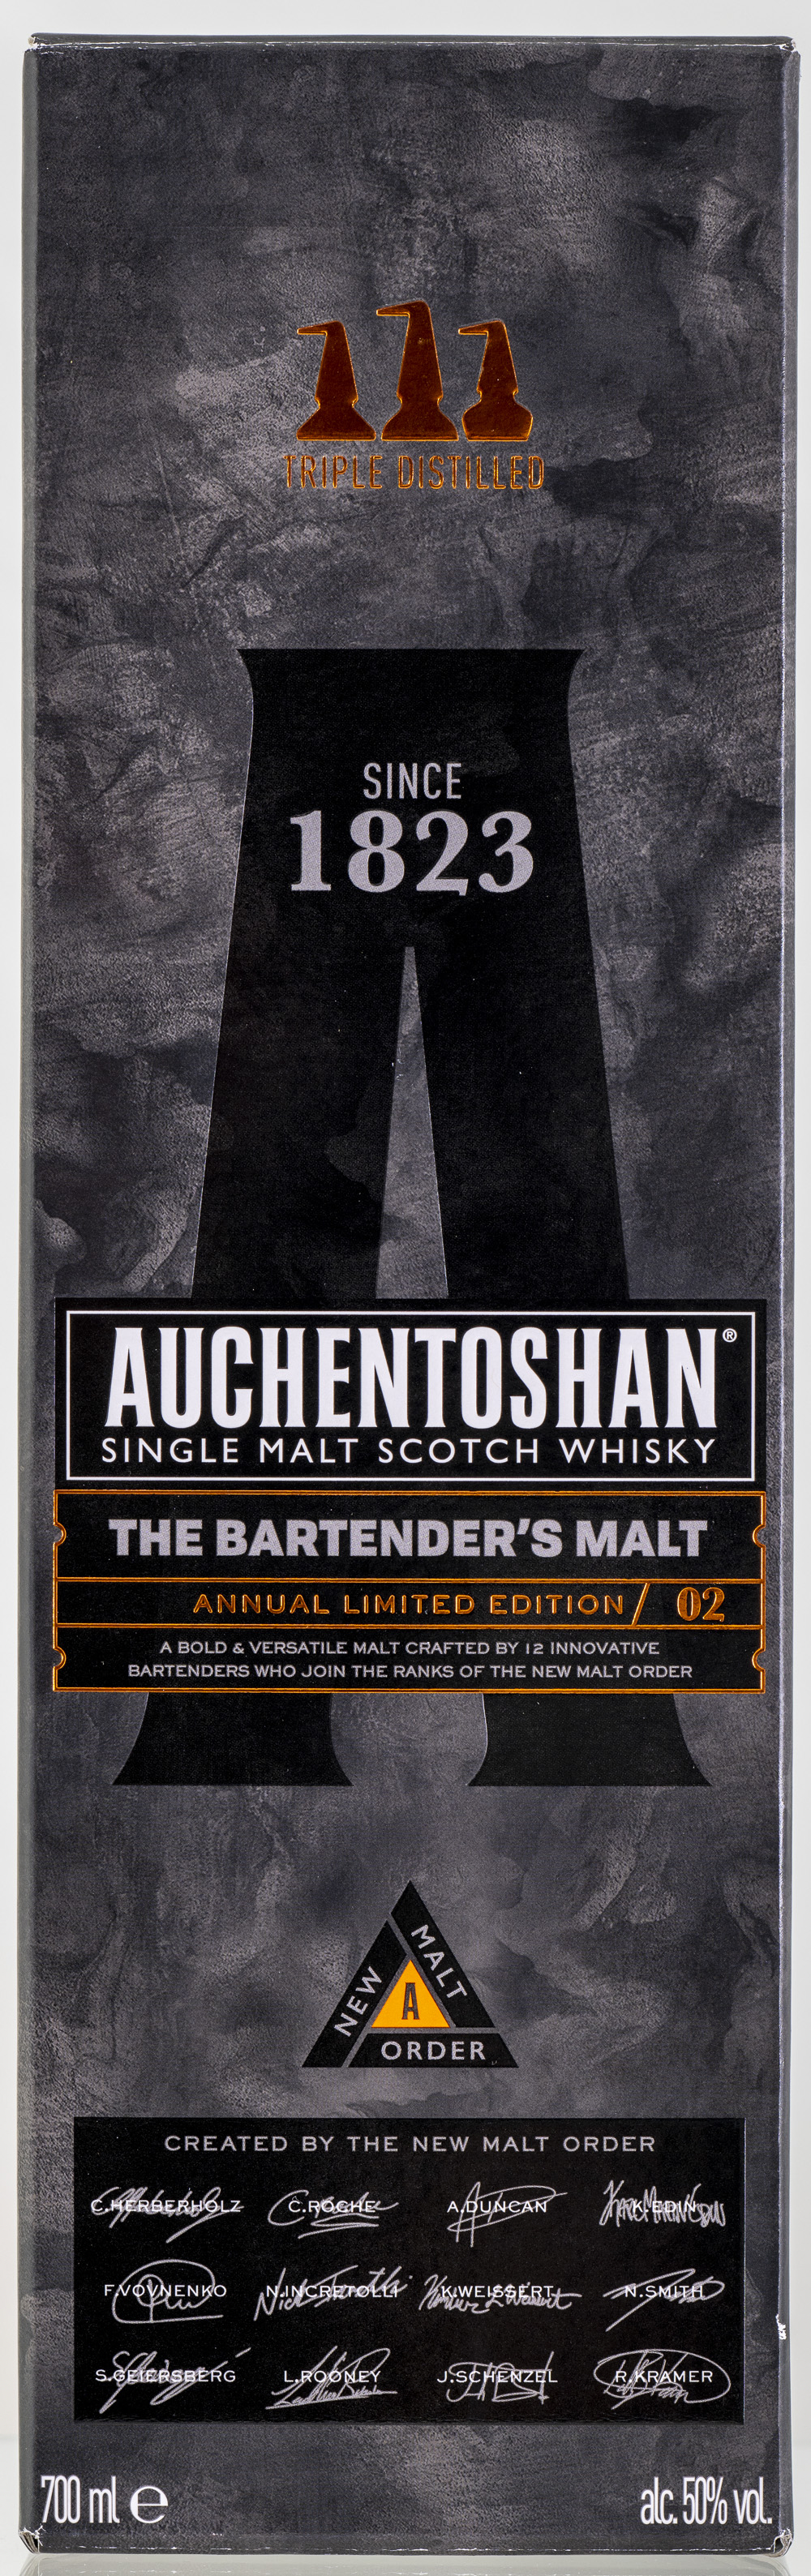 Billede: PHC_2187 - Auchentoshan The Bartenders Malt Annual Limited Edition 02 - box front.jpg